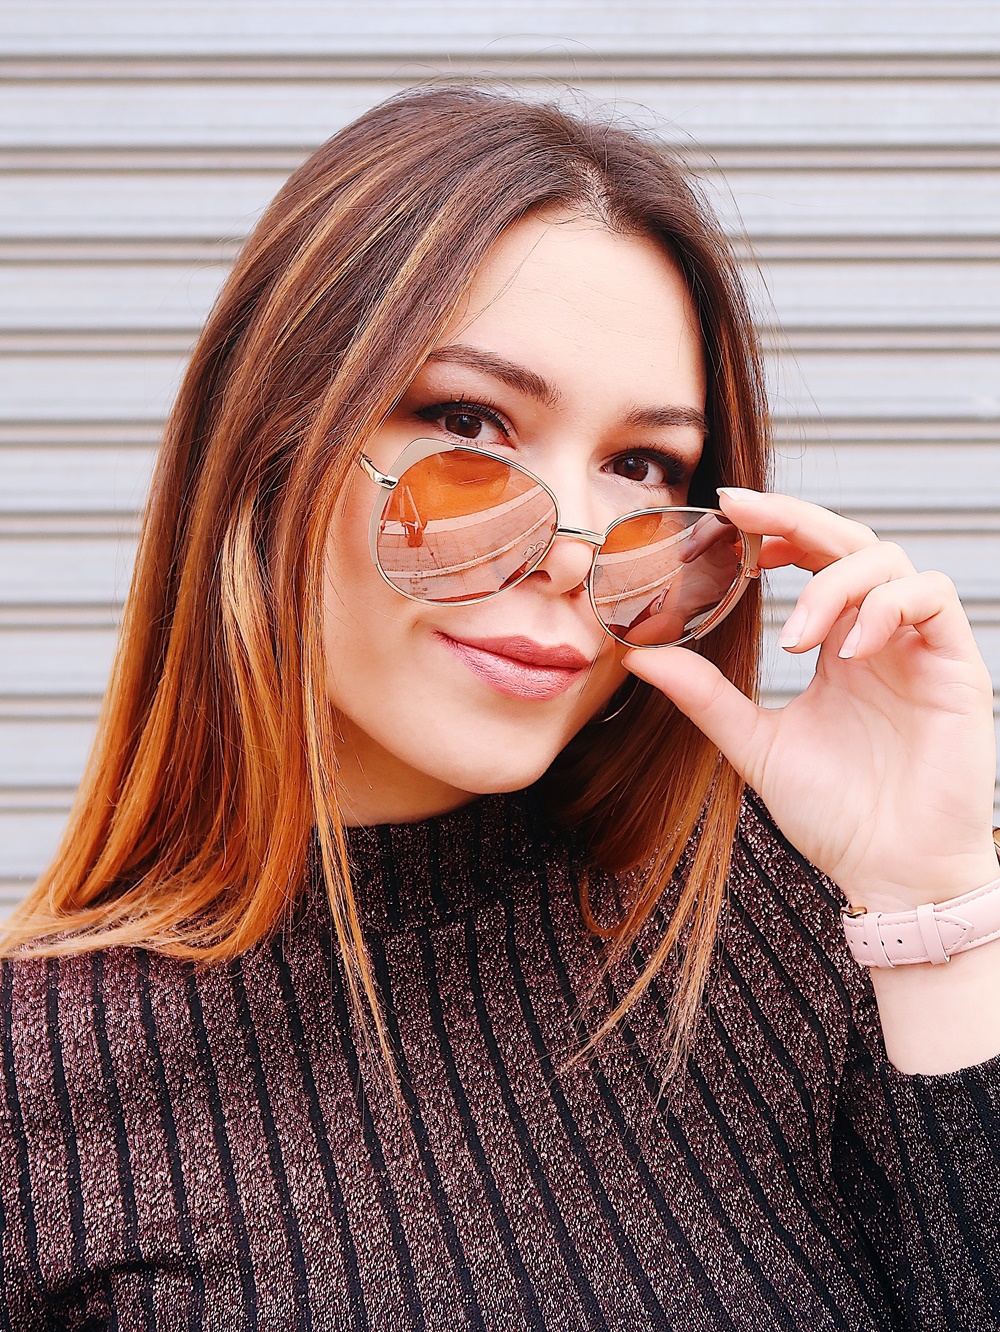 Occhiali da sole chiari, Stradivarius sunglasses, Mina Masotina, fashion blogger Italia